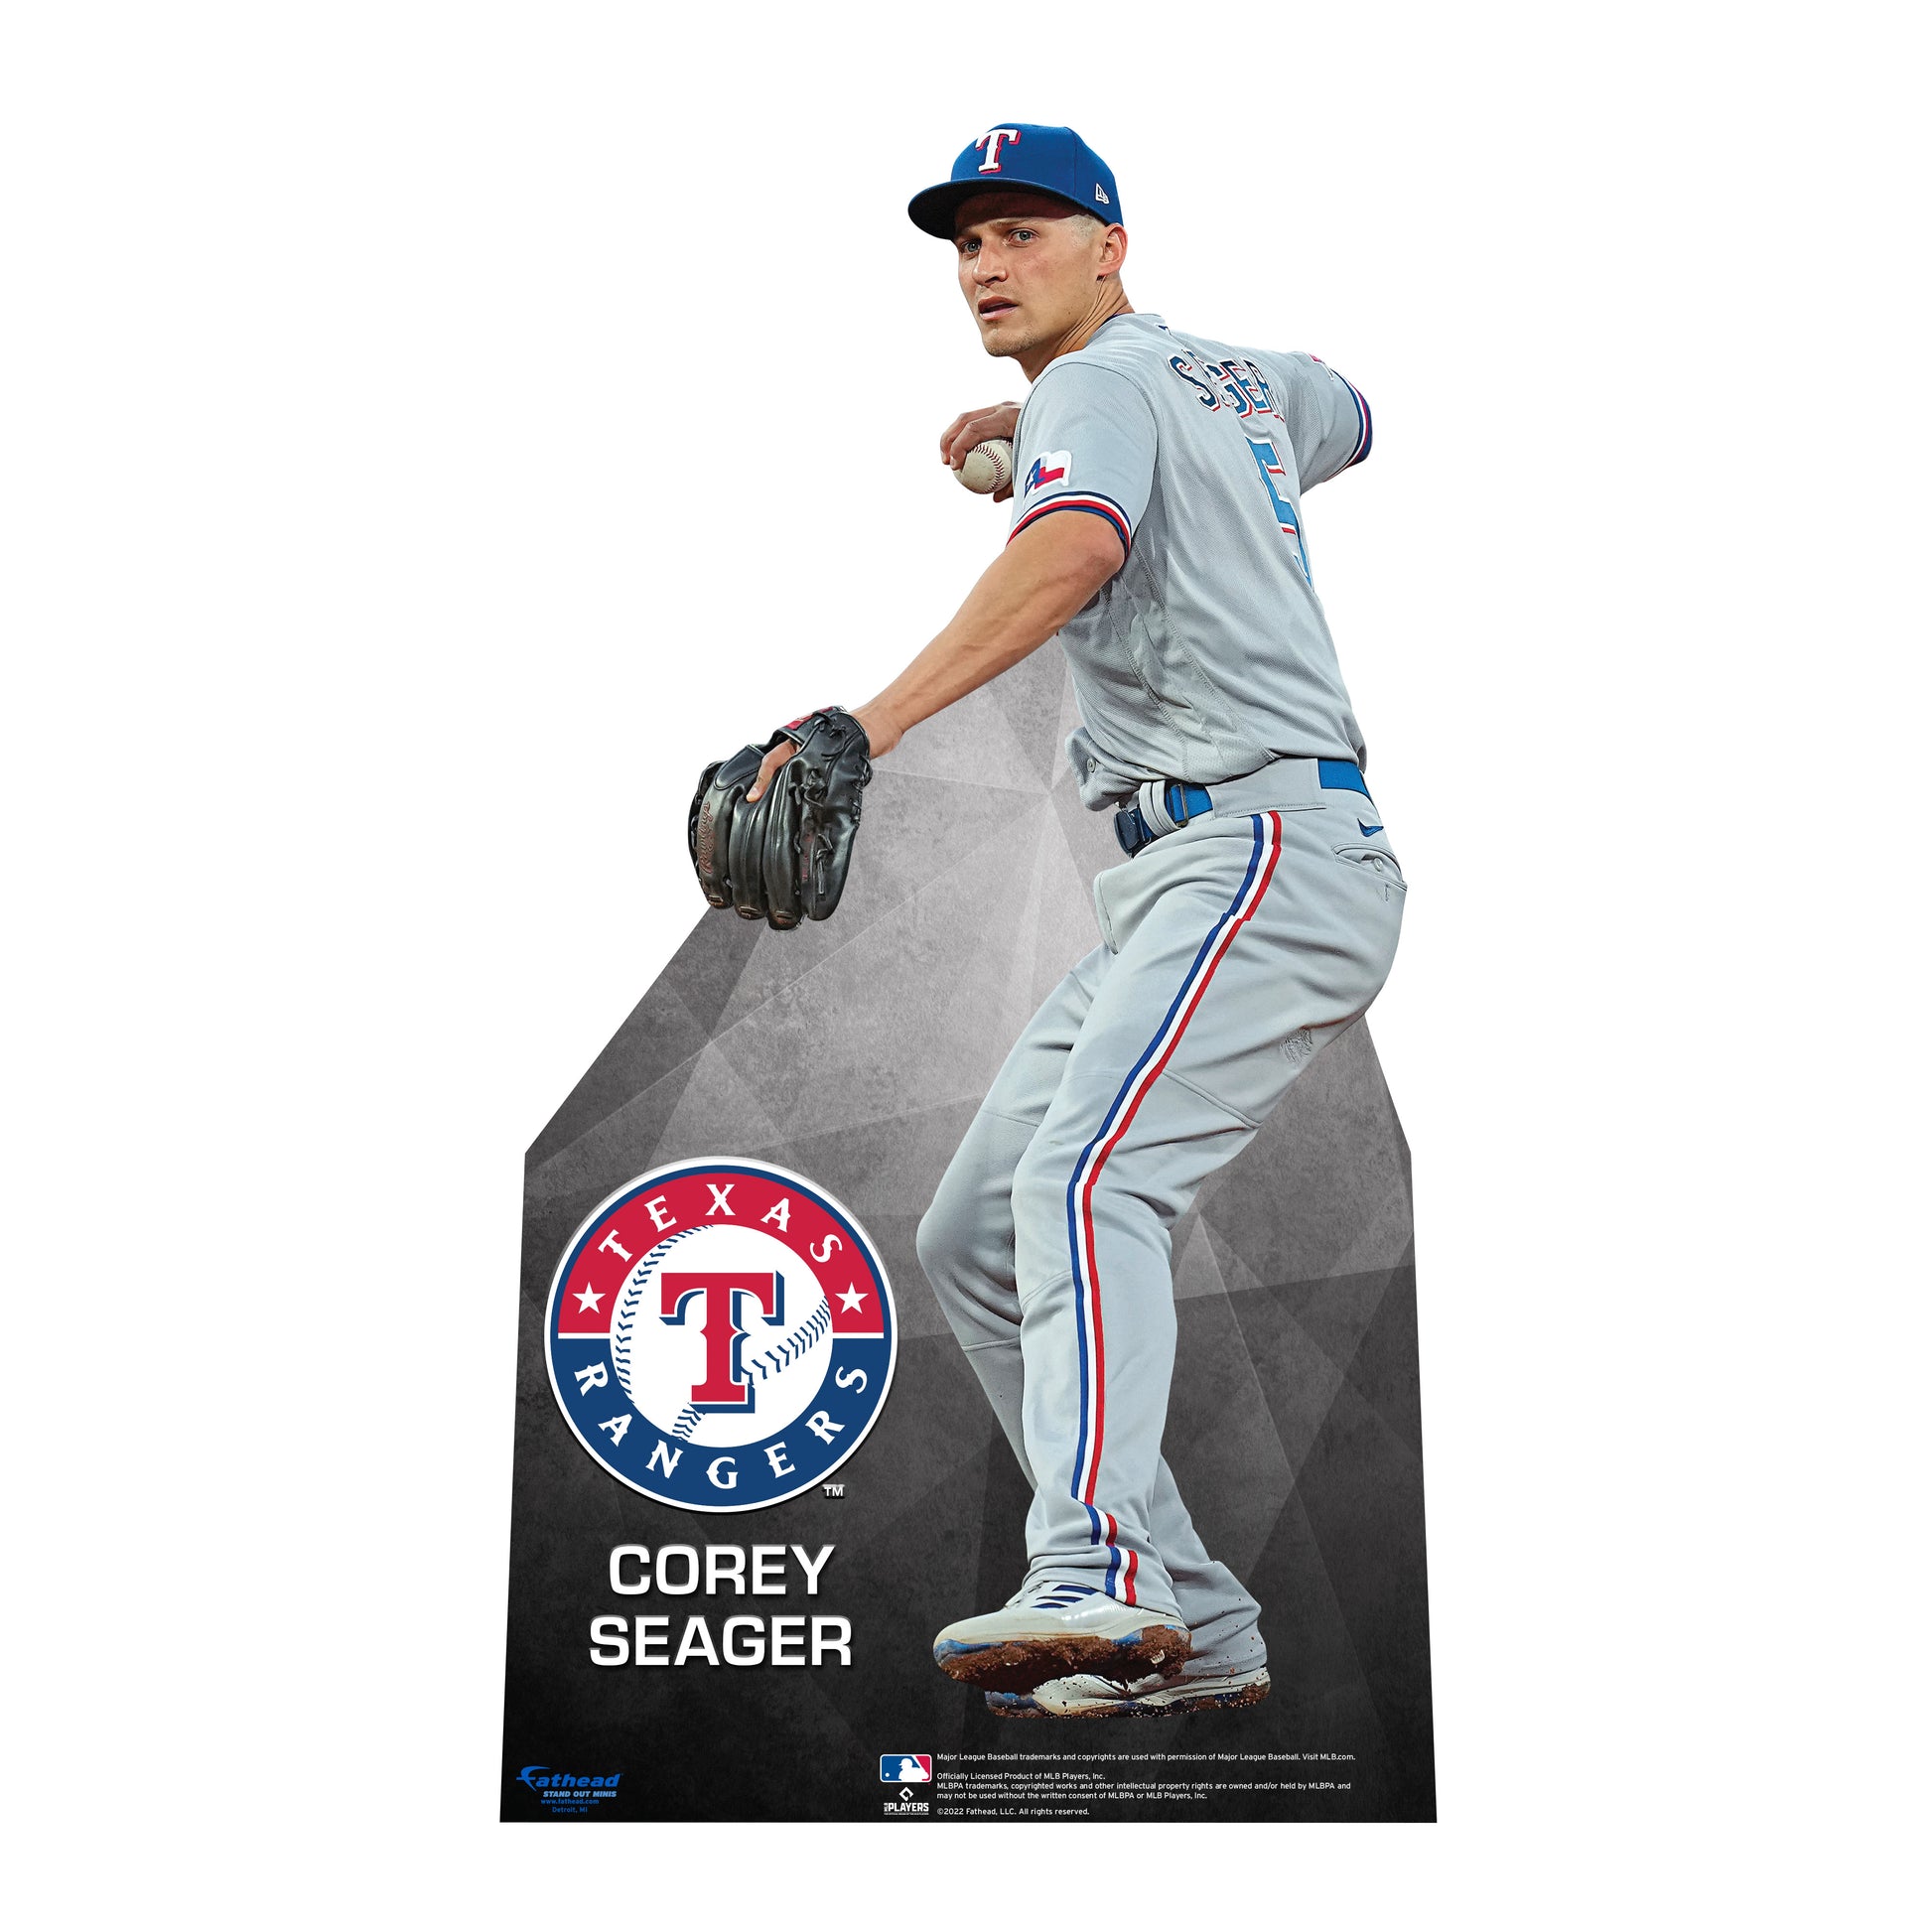 Texas Seager (Corey Seager) Texas Rangers - 1/1 Original on Wood